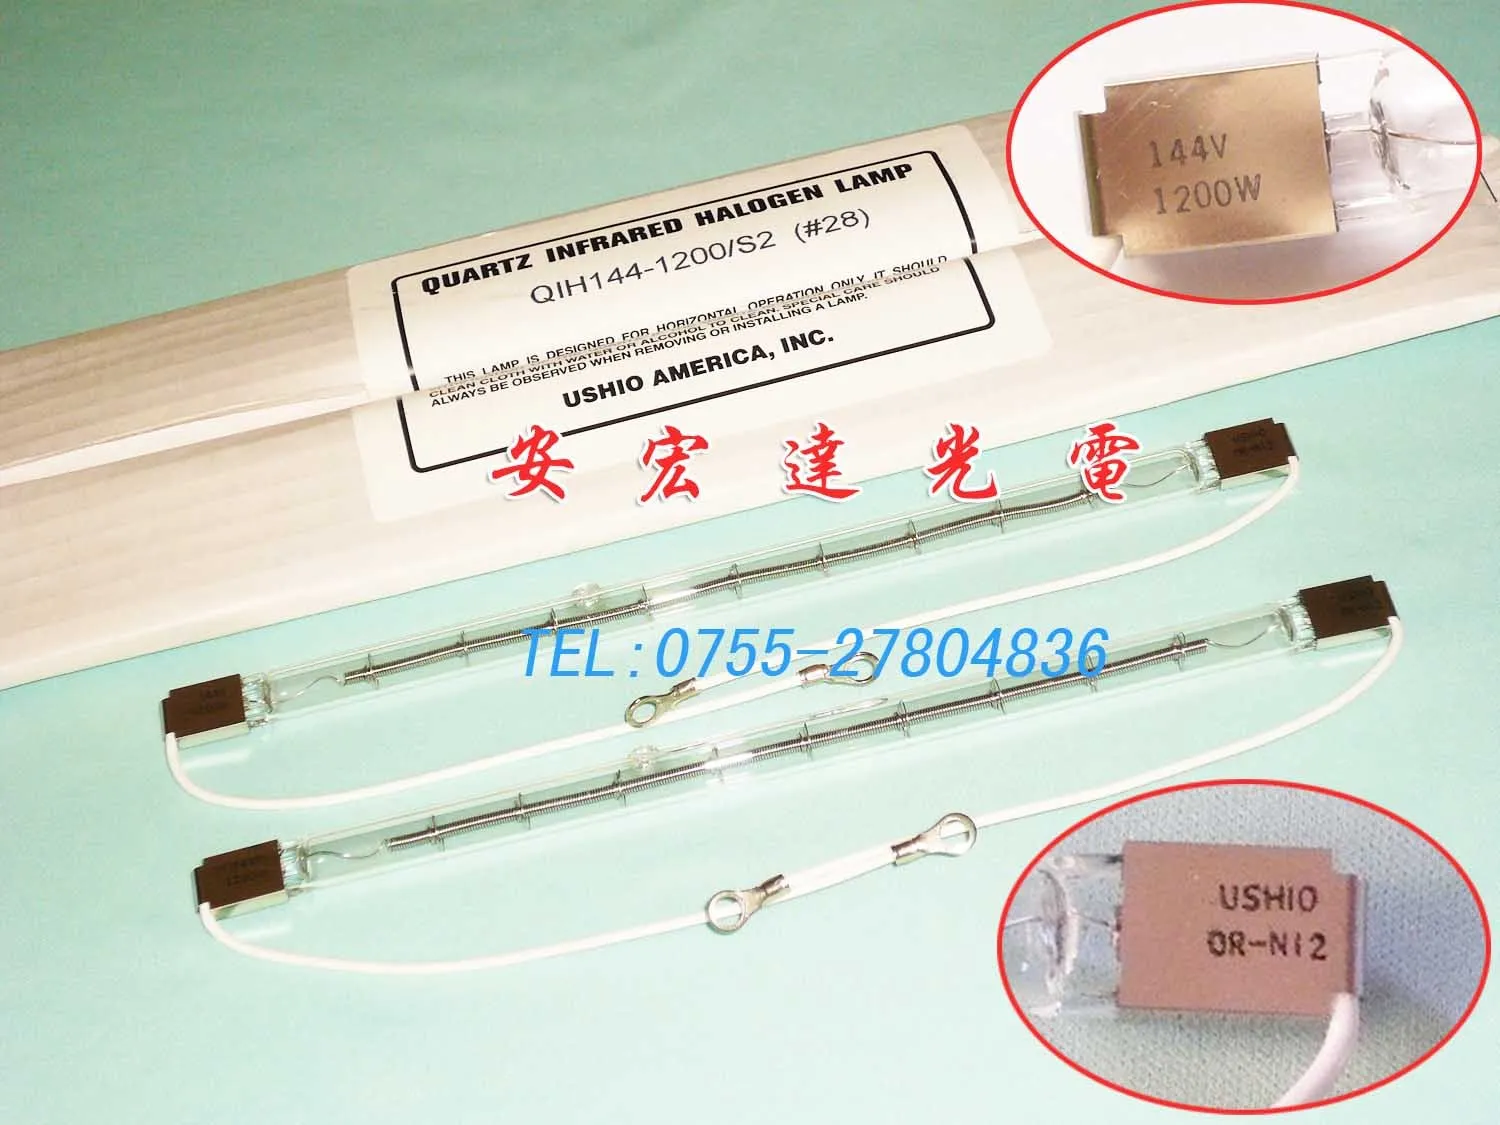 

Limited Real Transparent Tungsten Halogen Lamp ara Piloto Ushio Heated Qih 144 - 1200 S2 Infrared